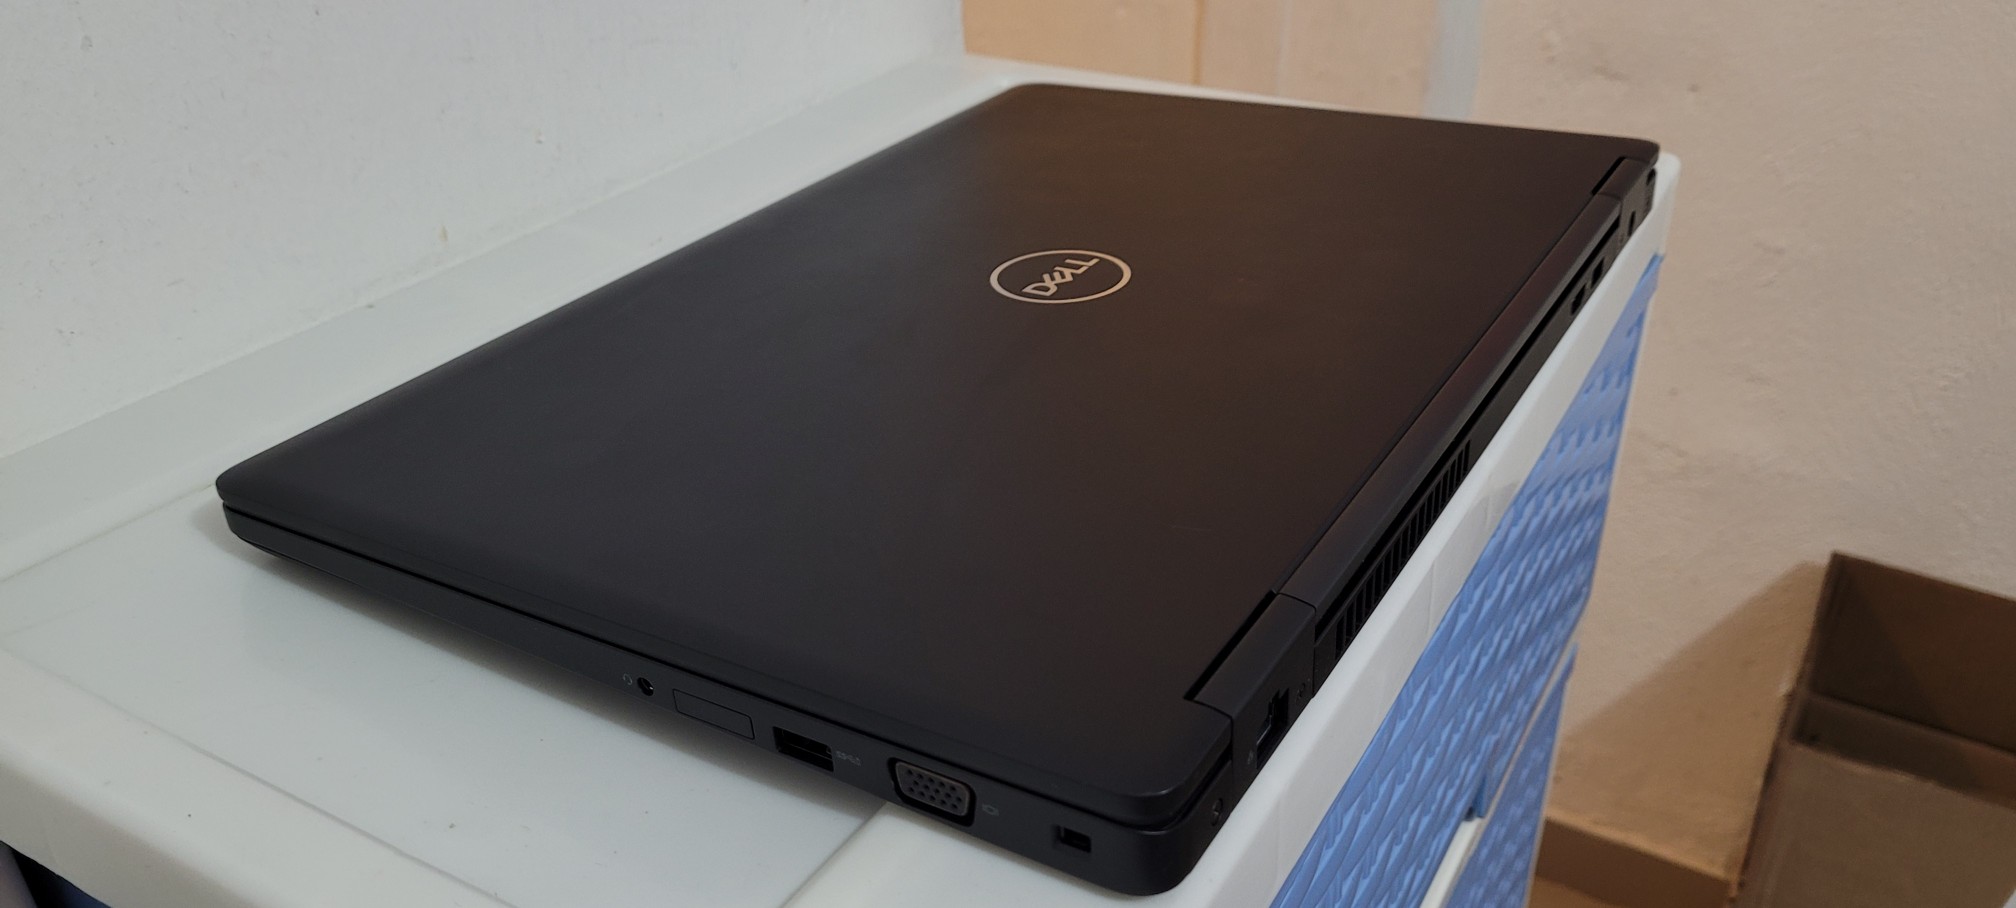 computadoras y laptops - Dell 7470 14 Pulg Core i7 6ta Gen Ram 16gb Disco 512gb SSD Video 8gb 2